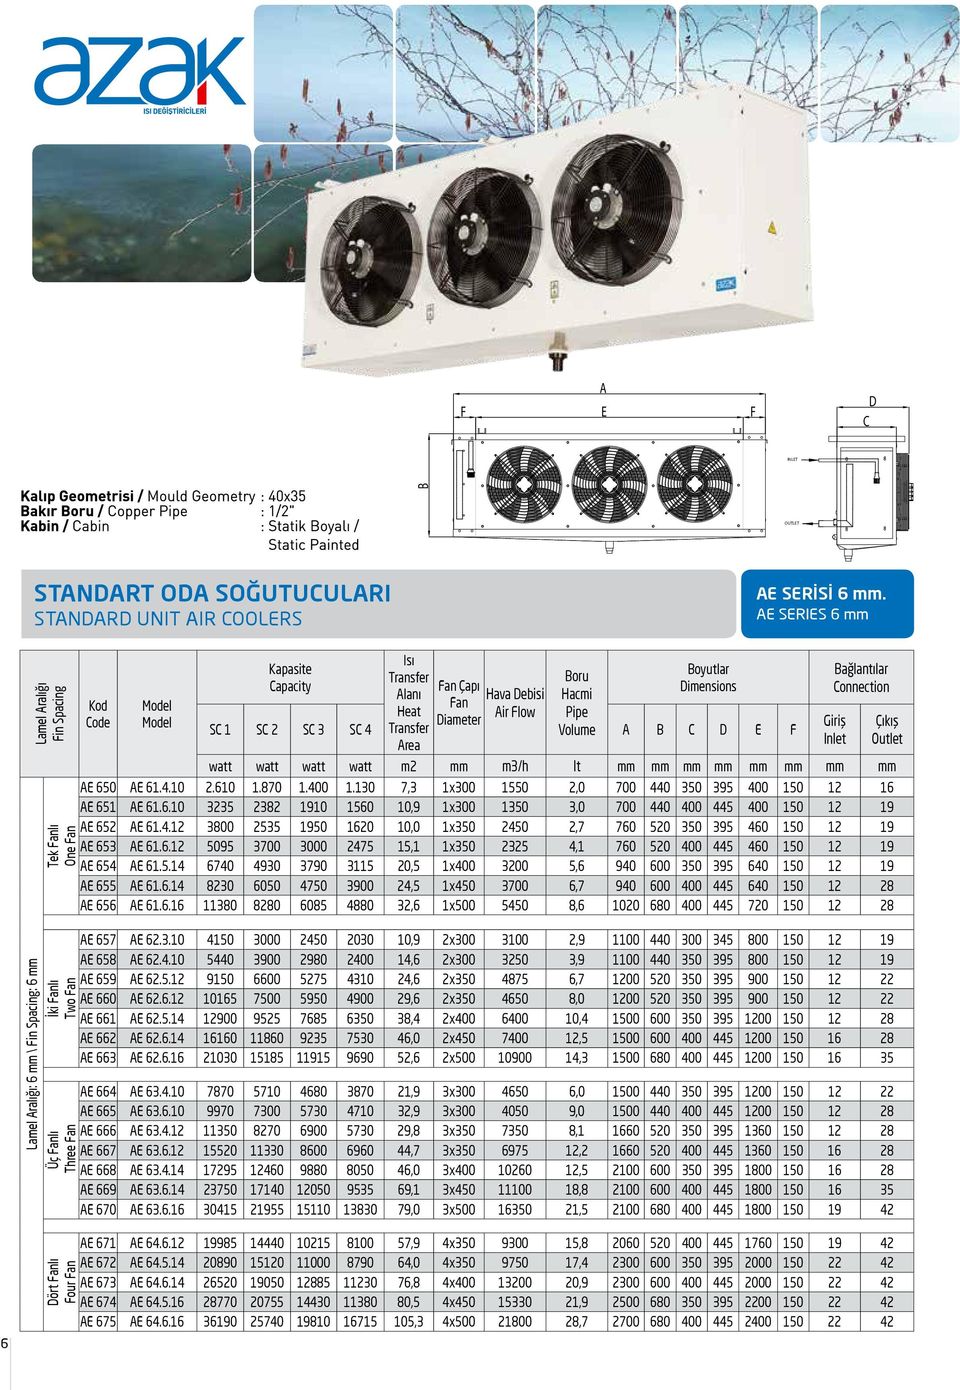 Dimensions Alanı Hava Debisi Hacmi Fan Heat Air Flow Pipe Diameter SC 1 SC 2 SC 3 SC 4 Volume A B C D E F Area Bağlantılar Connection watt watt watt watt m2 mm m3/h lt mm mm mm mm mm mm mm mm AE 650